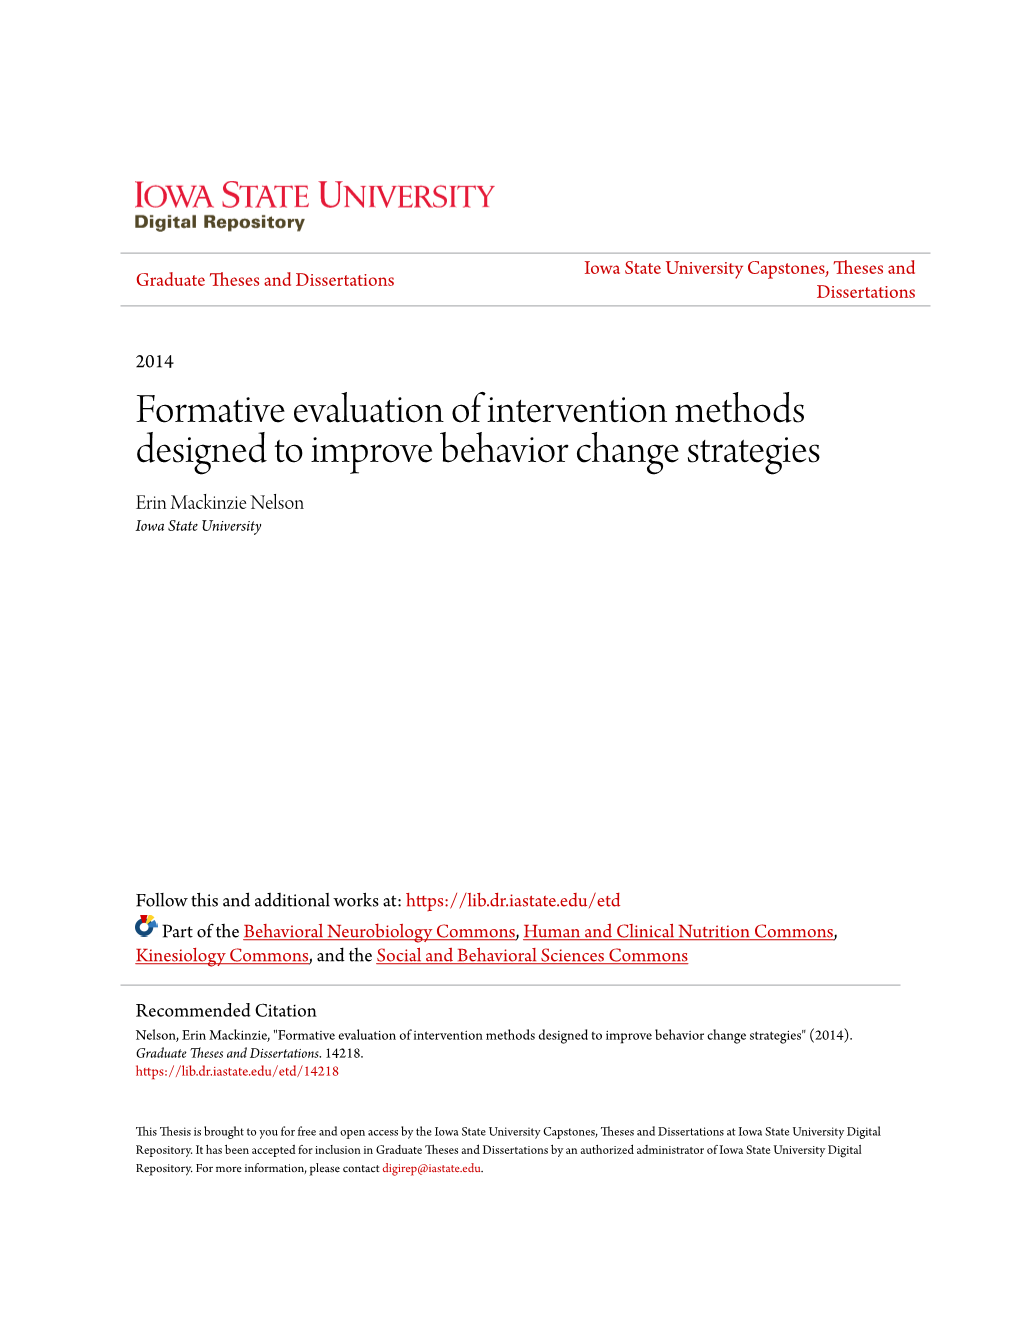 Formative Evaluation of Intervention Methods Designed to Improve Behavior Change Strategies Erin Mackinzie Nelson Iowa State University